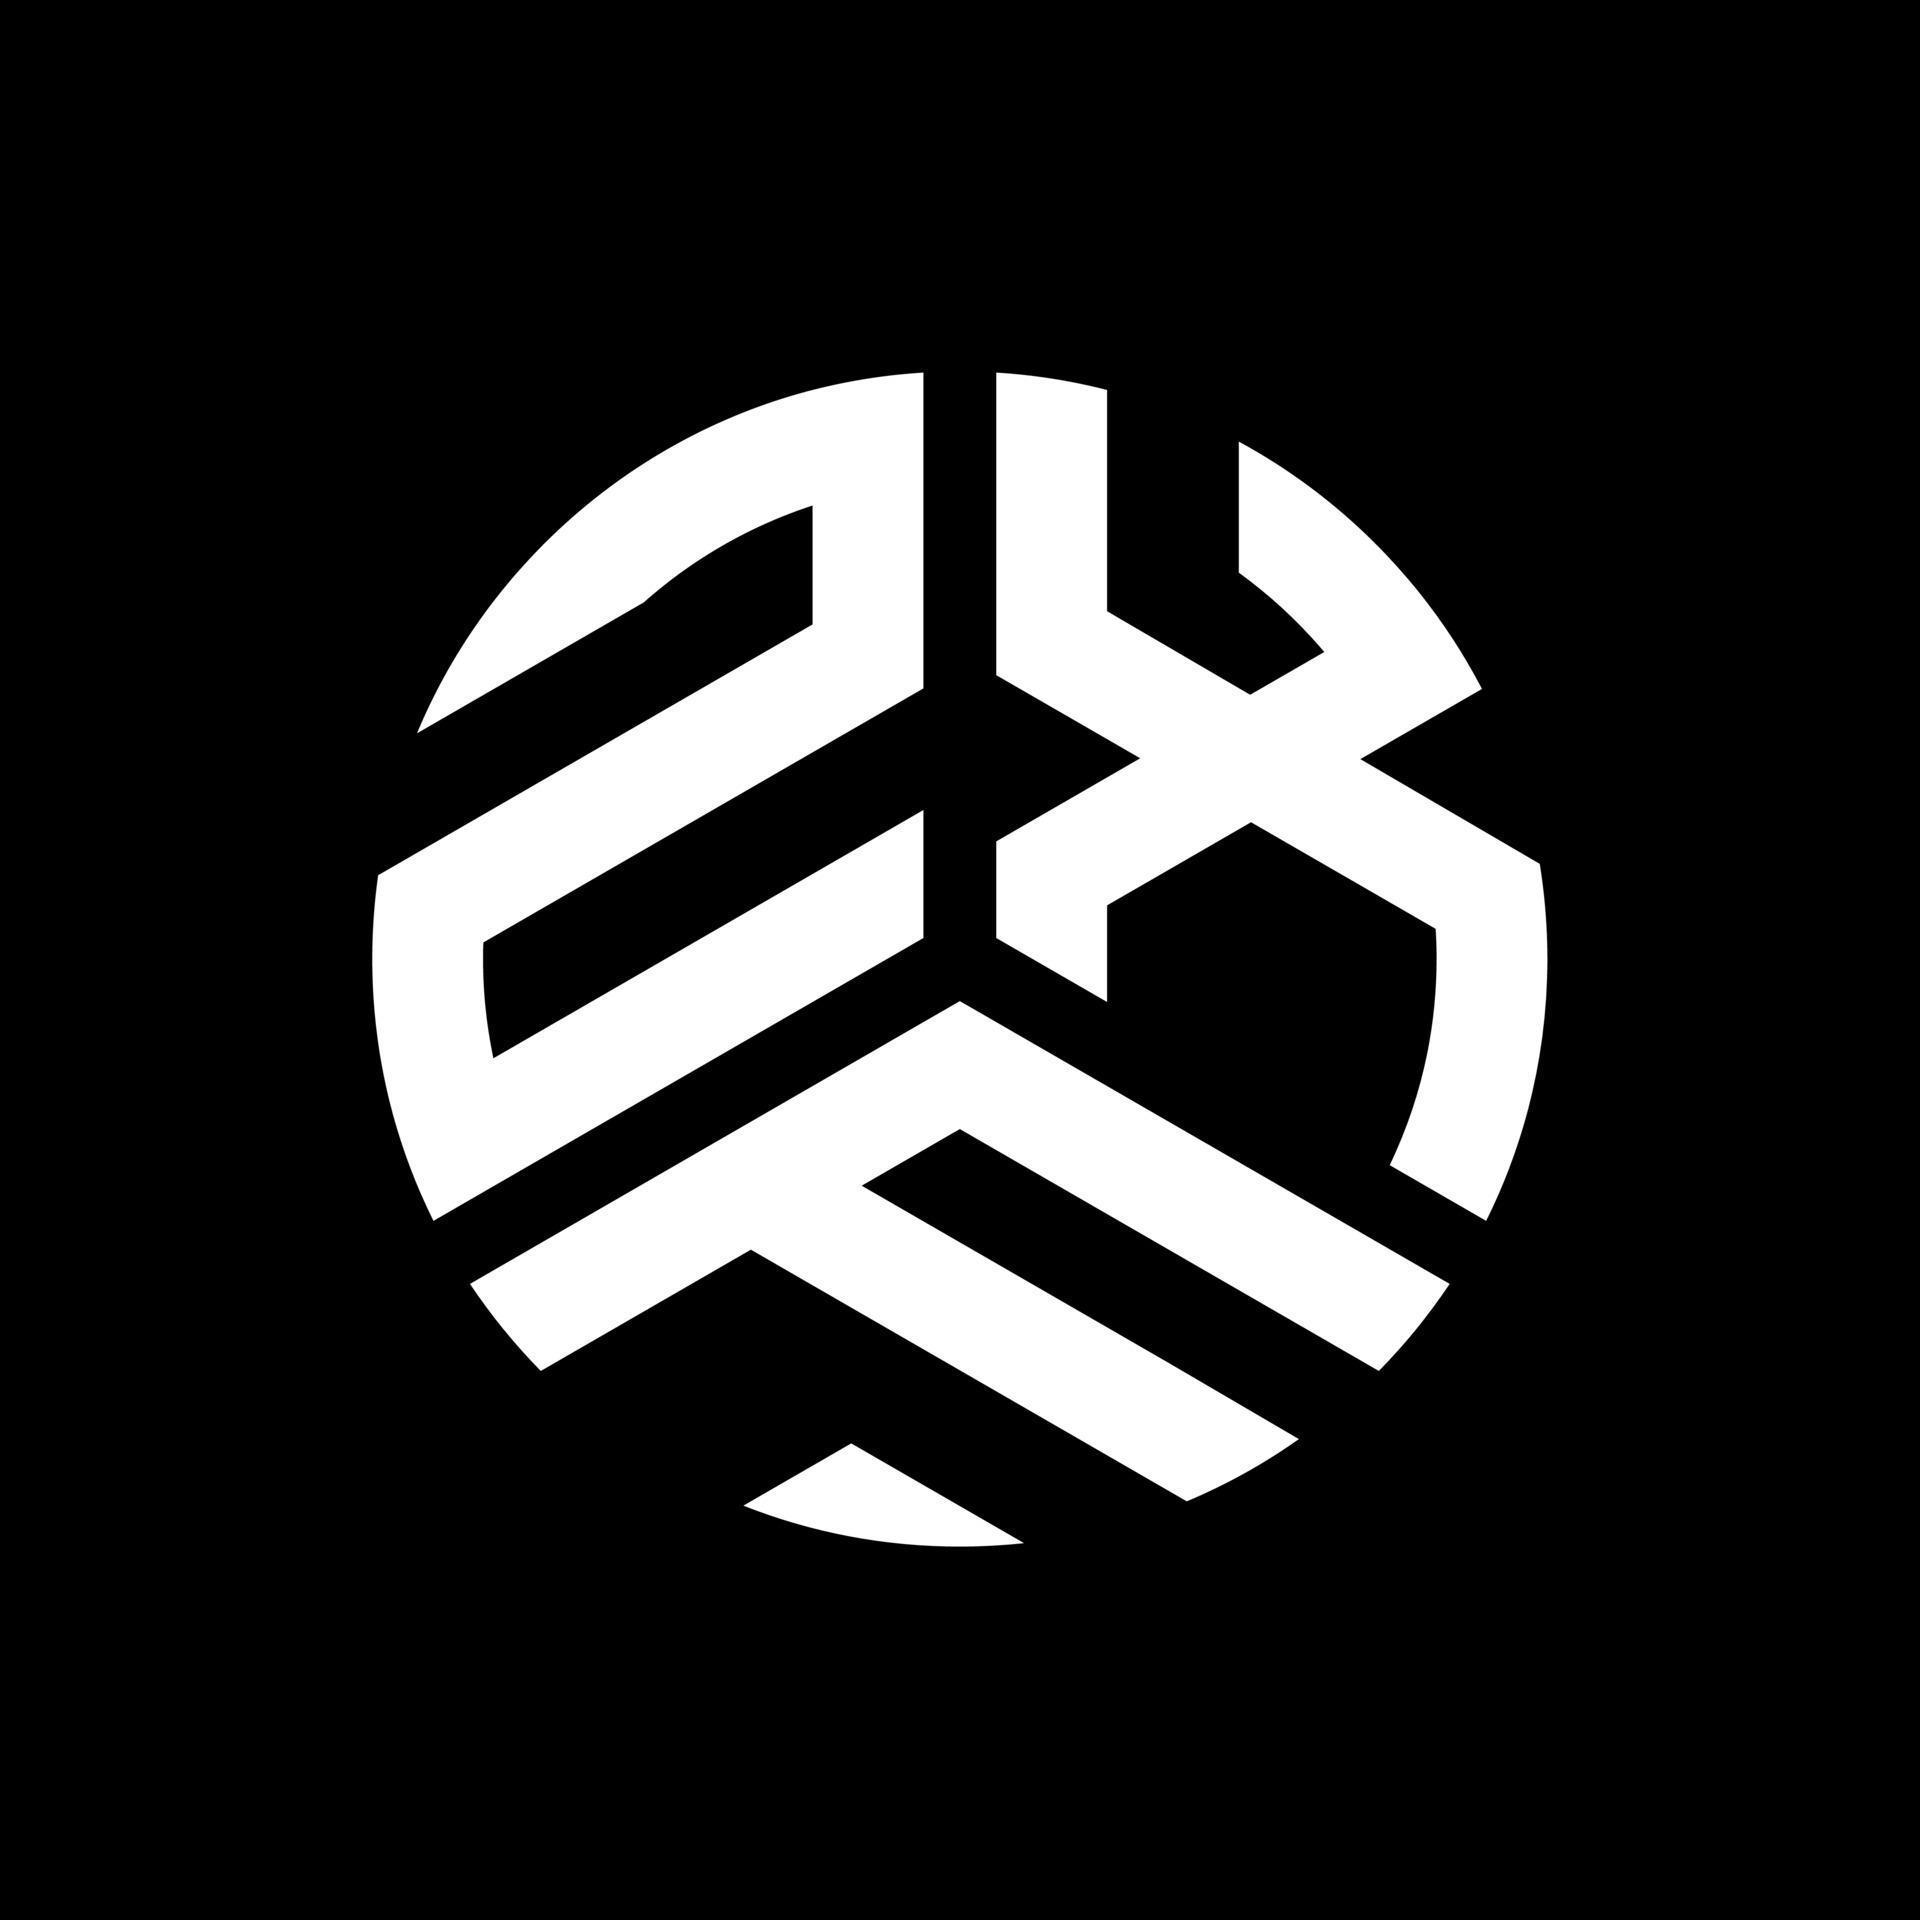 diseño de logotipo de letra zxf sobre fondo negro. concepto de logotipo de letra inicial creativa zxf. diseño de letras zxf. vector